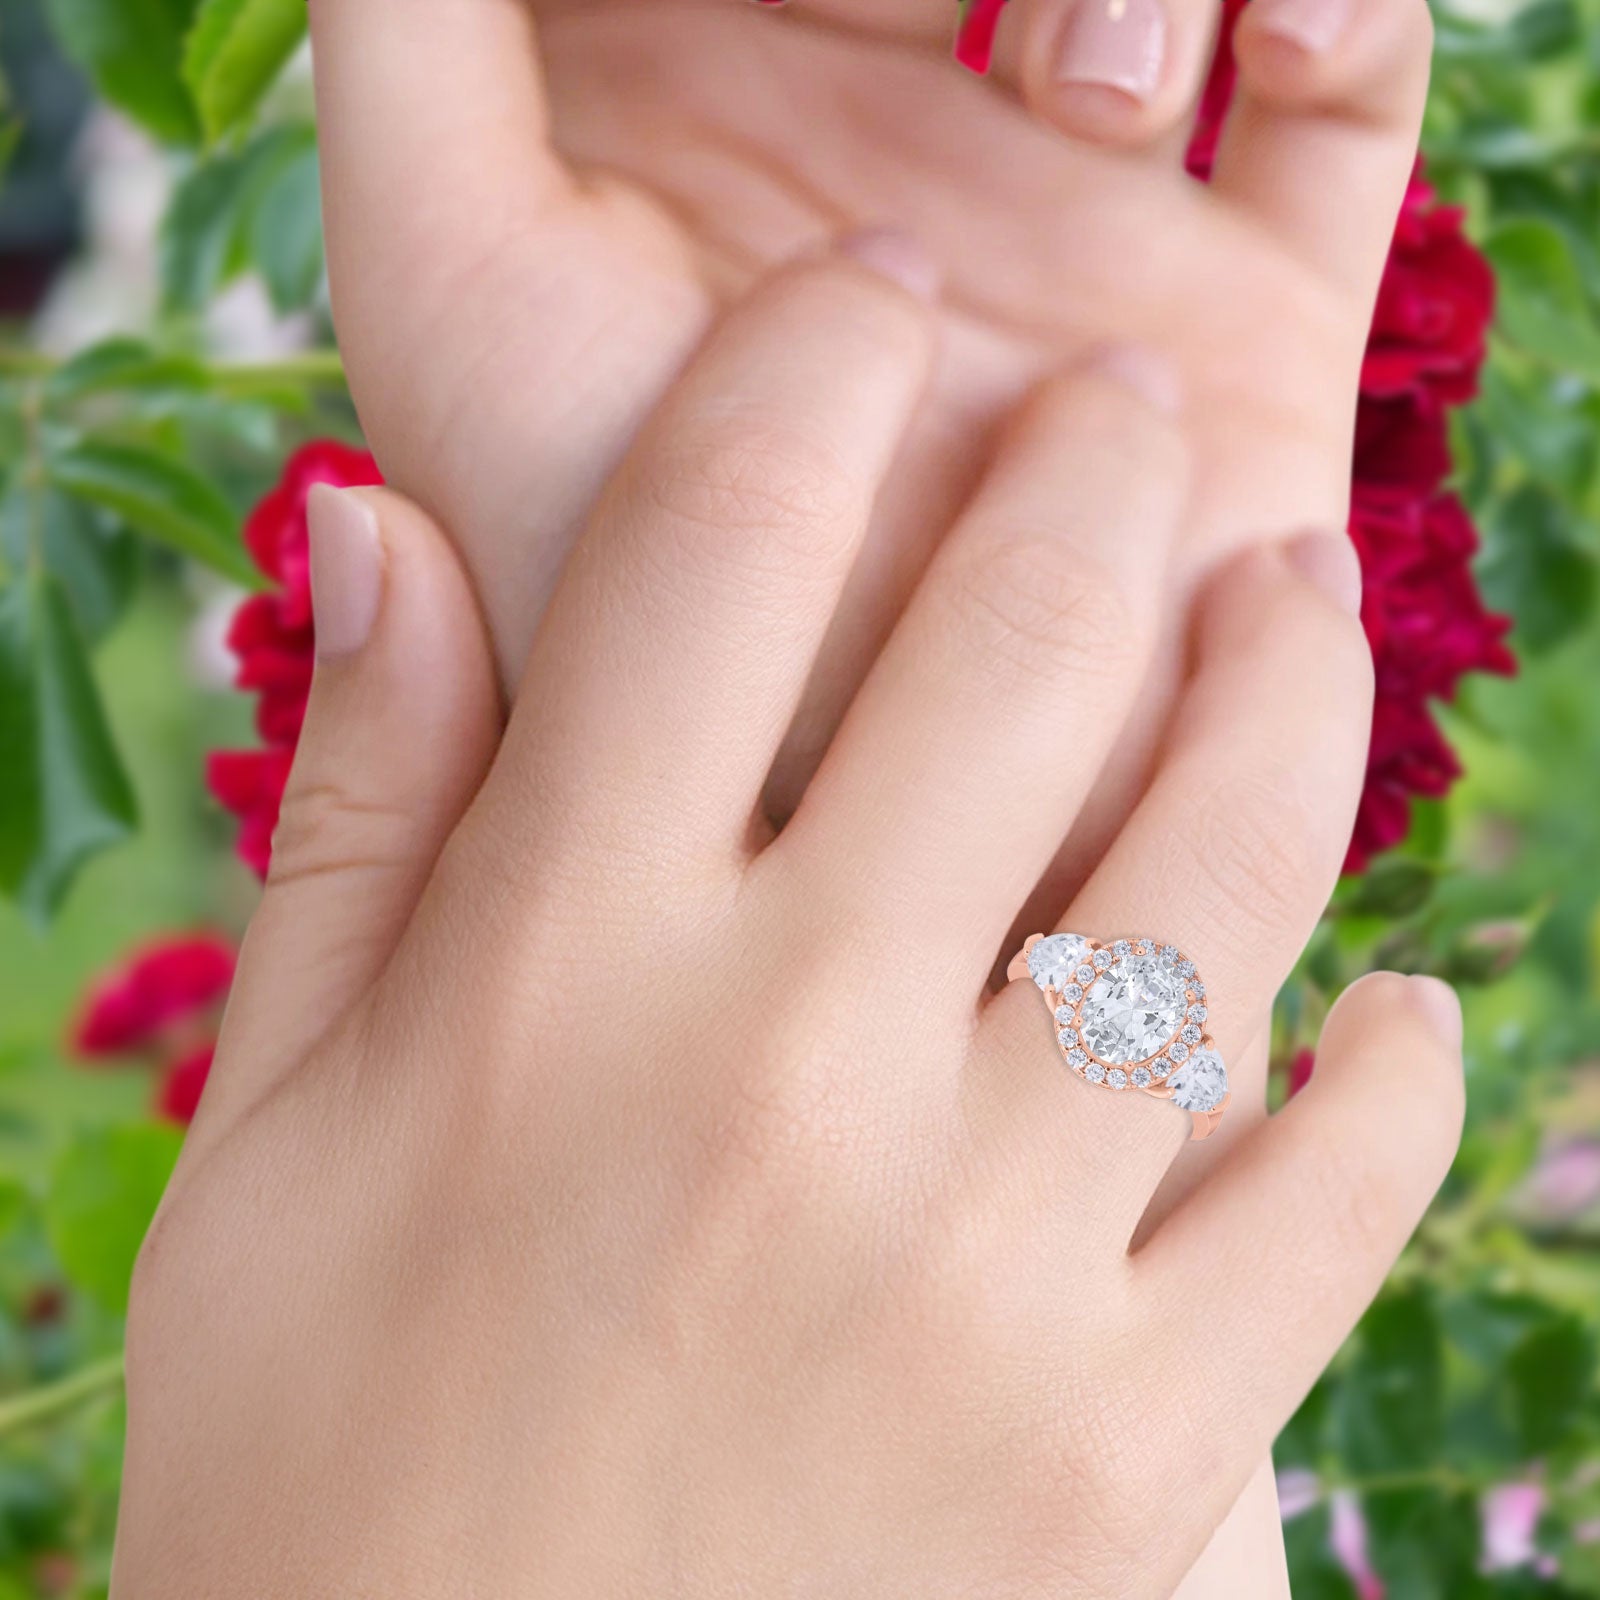 14K Gold Three Stone Oval Shape Bridal Simulated Cubic Zirconia Wedding Engagement Ring